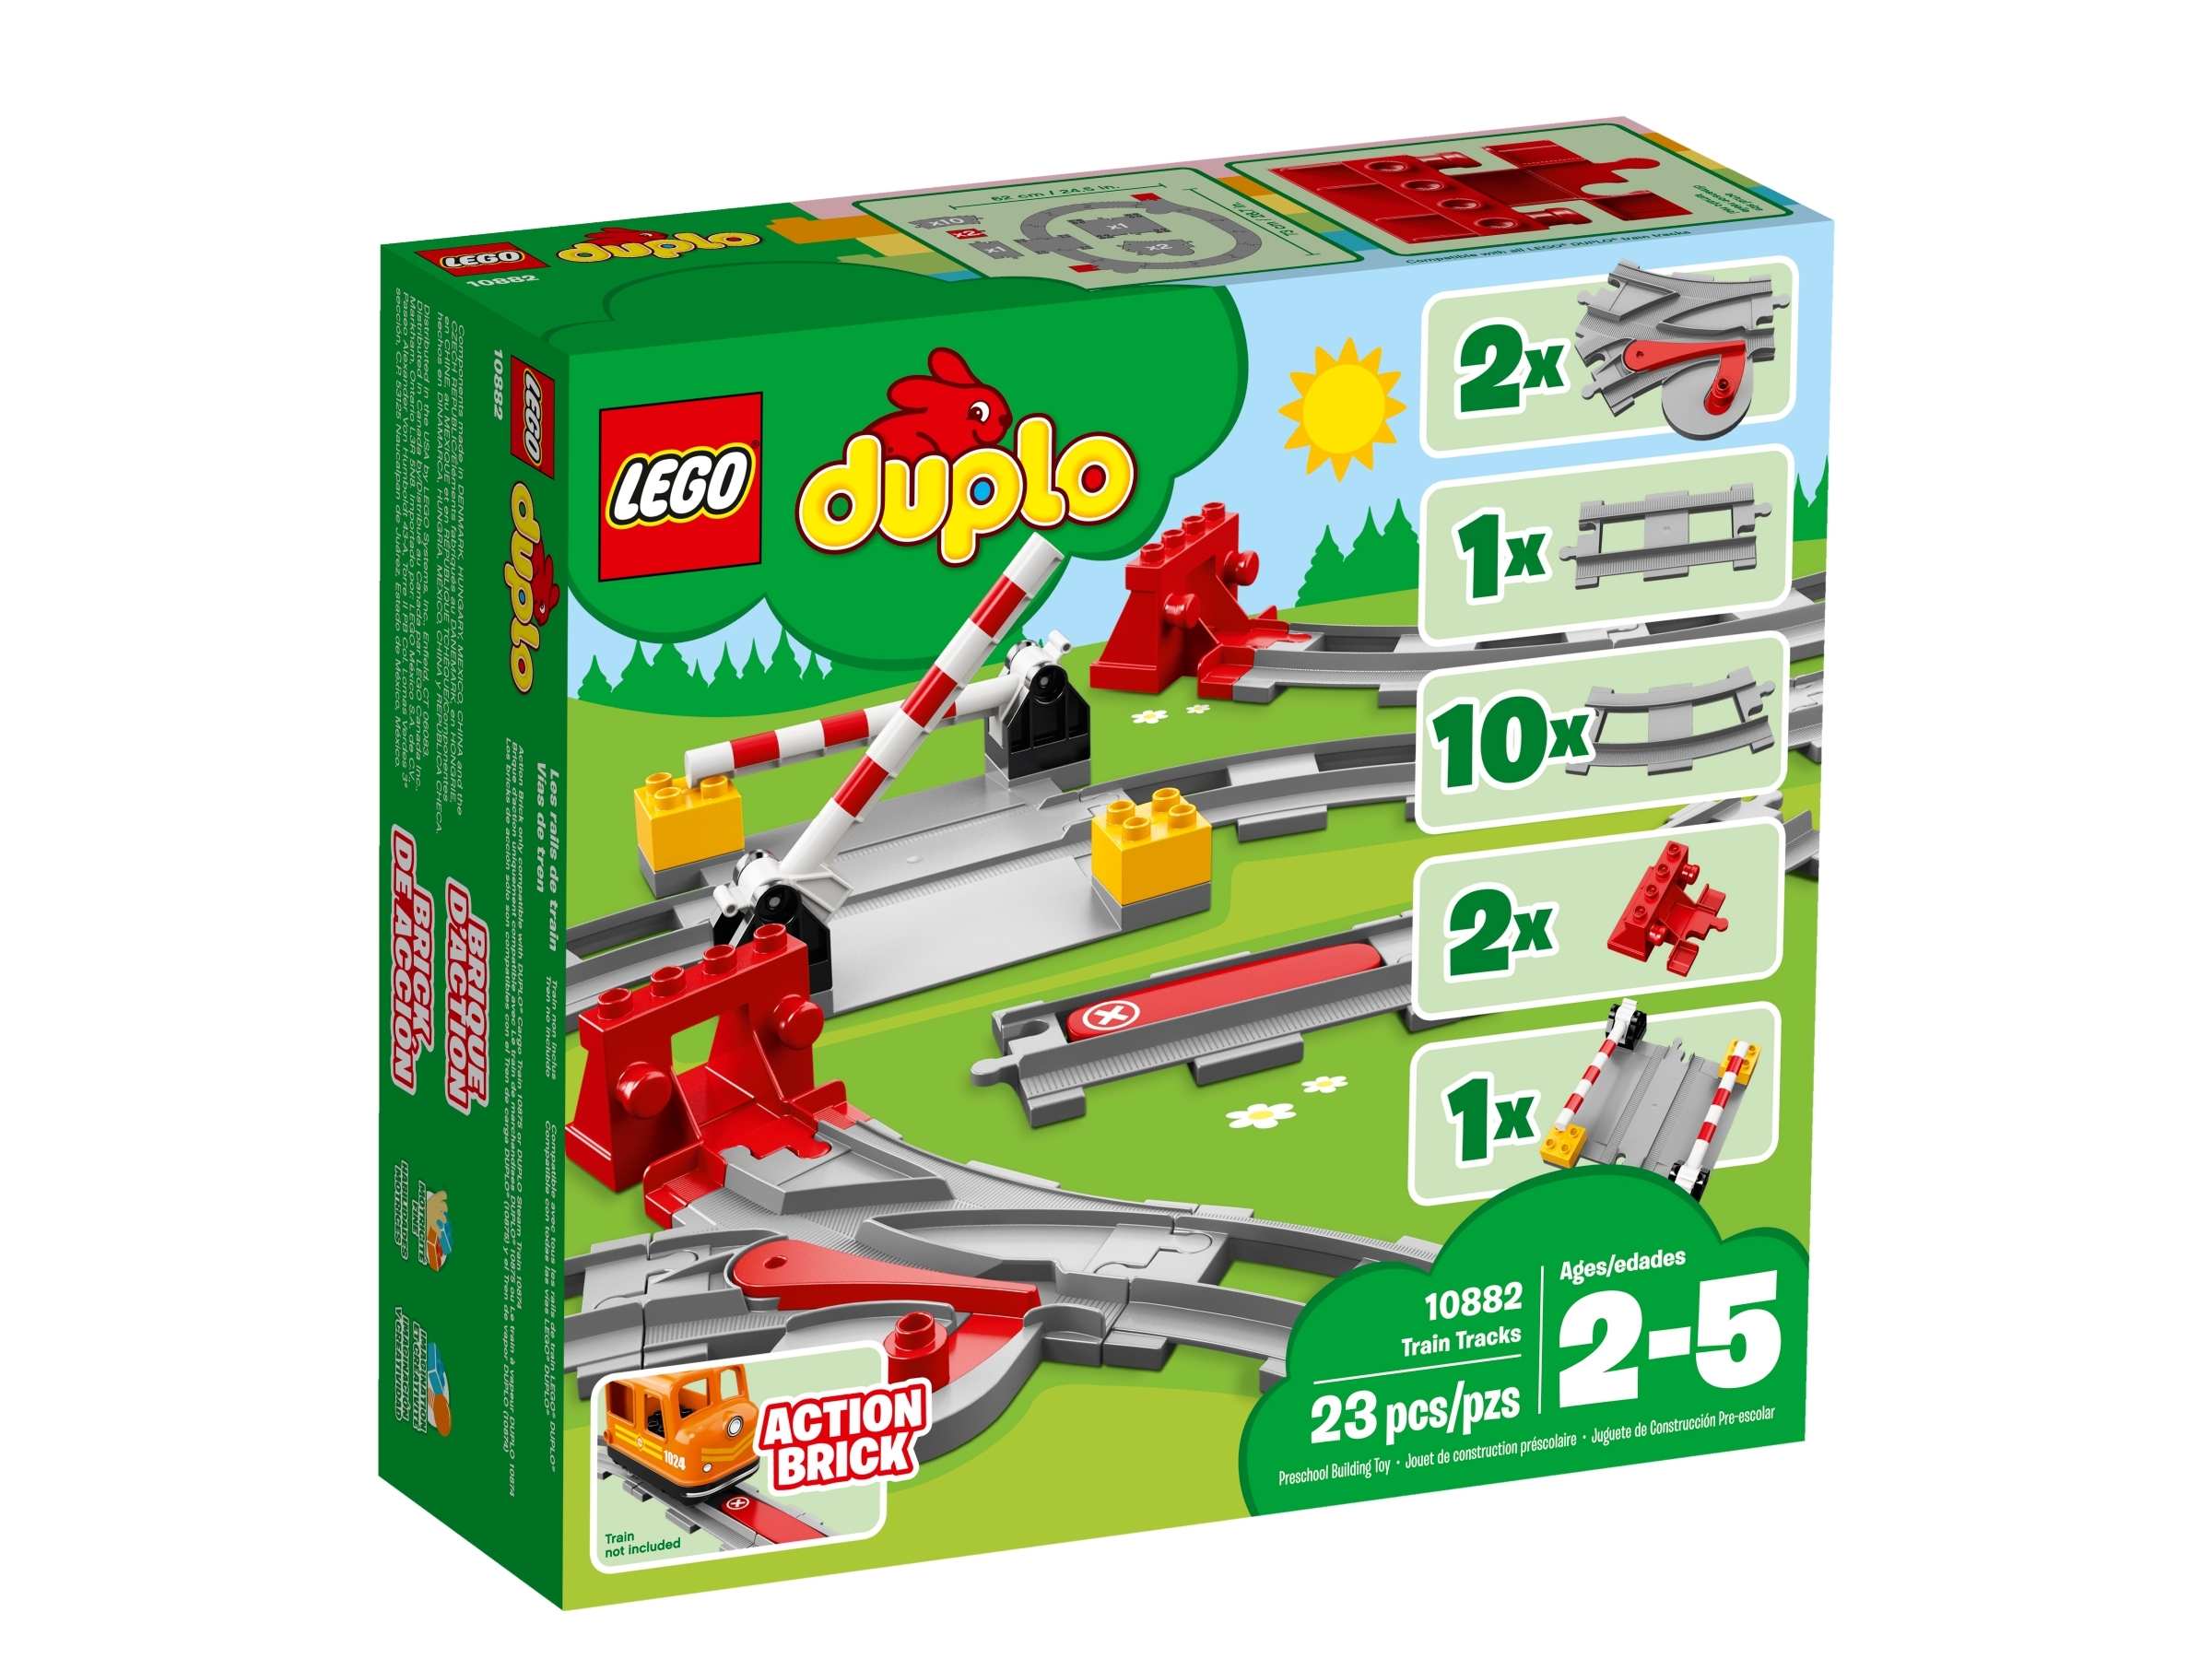 LEGO DUPLO NUMBER 6 Train Replacement 2 x 2 x 2 BLOCK Building Brick 